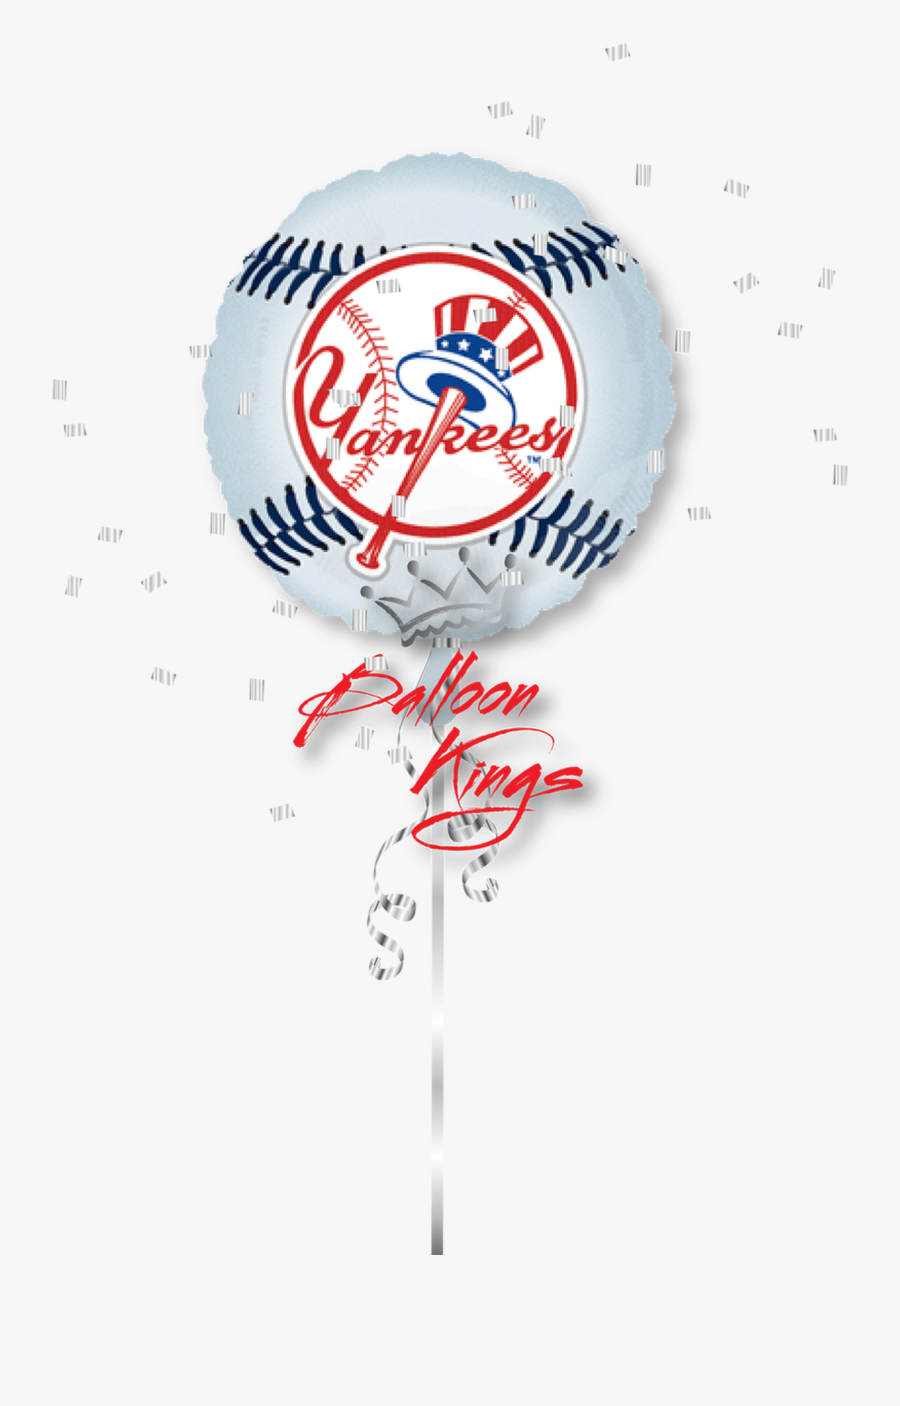 New York Yankees Ball Balloon Kings - New York Yankees, Transparent Clipart